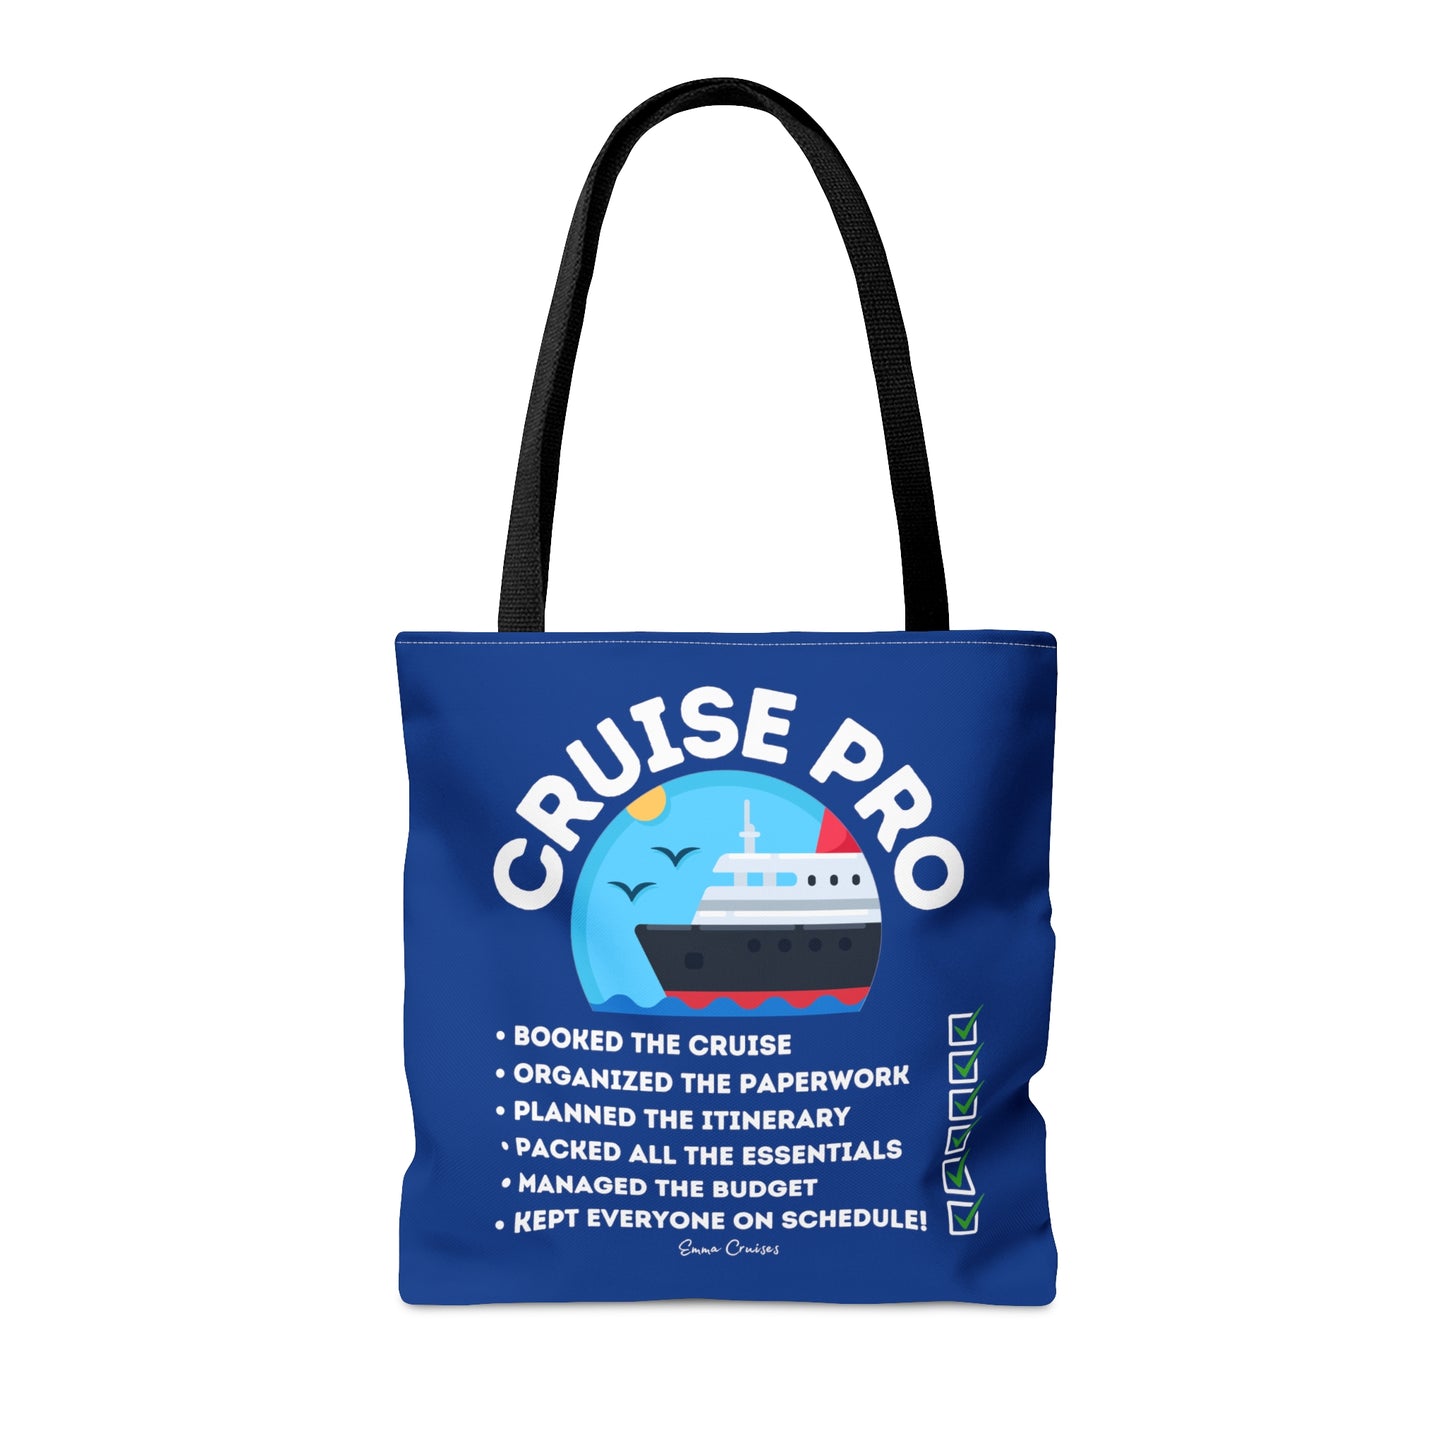 I'm a Cruise Pro - Bag